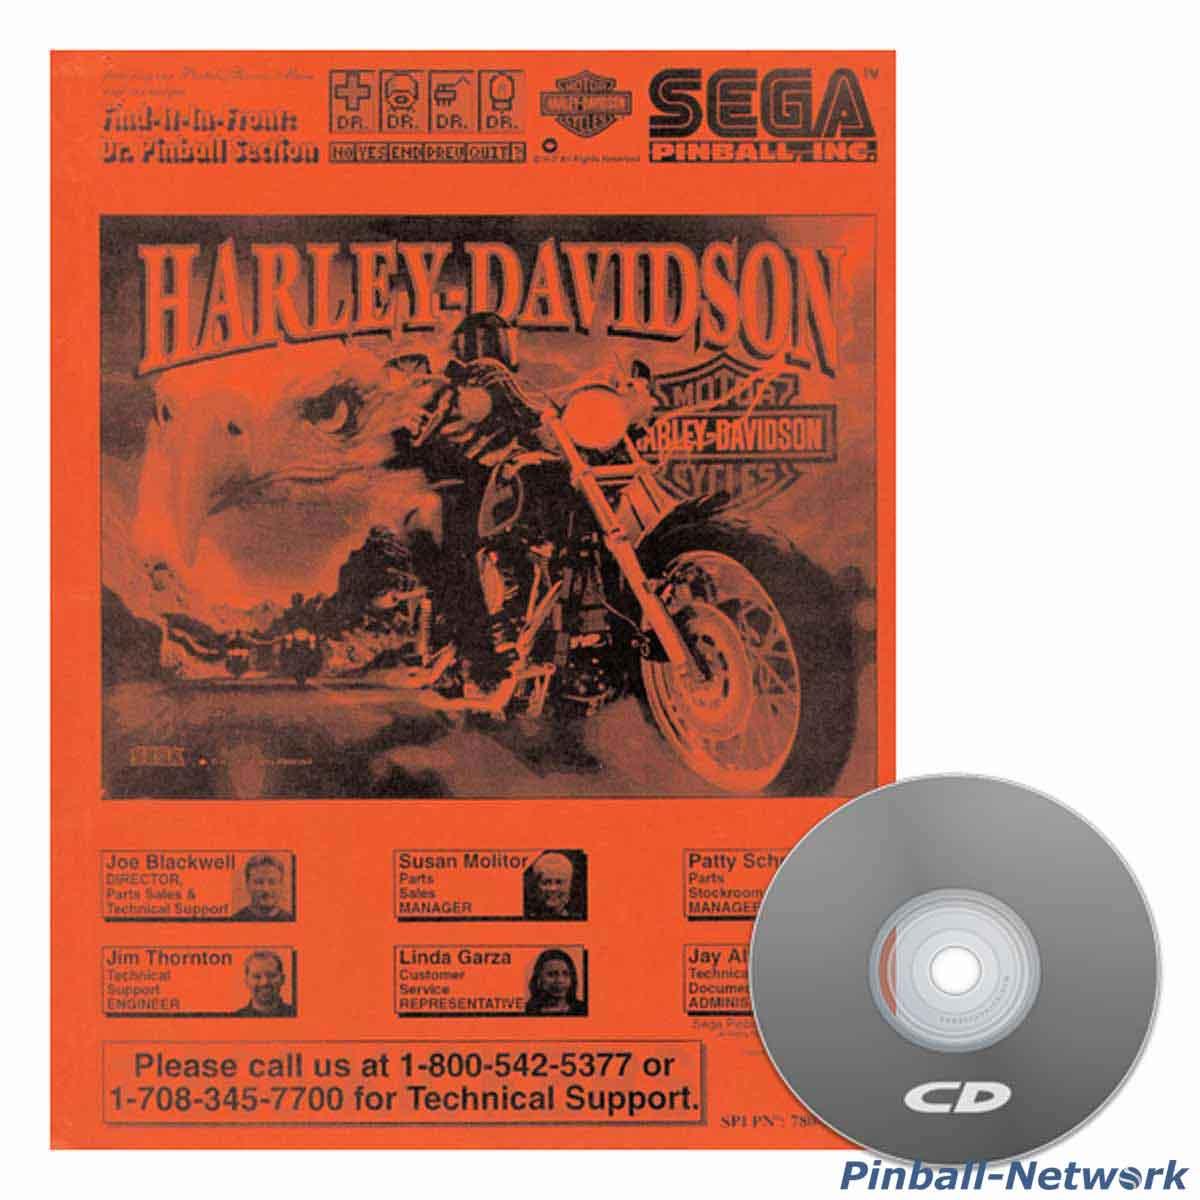 Harley-Davidson Sega Operations Manual - www.flipperteile.de